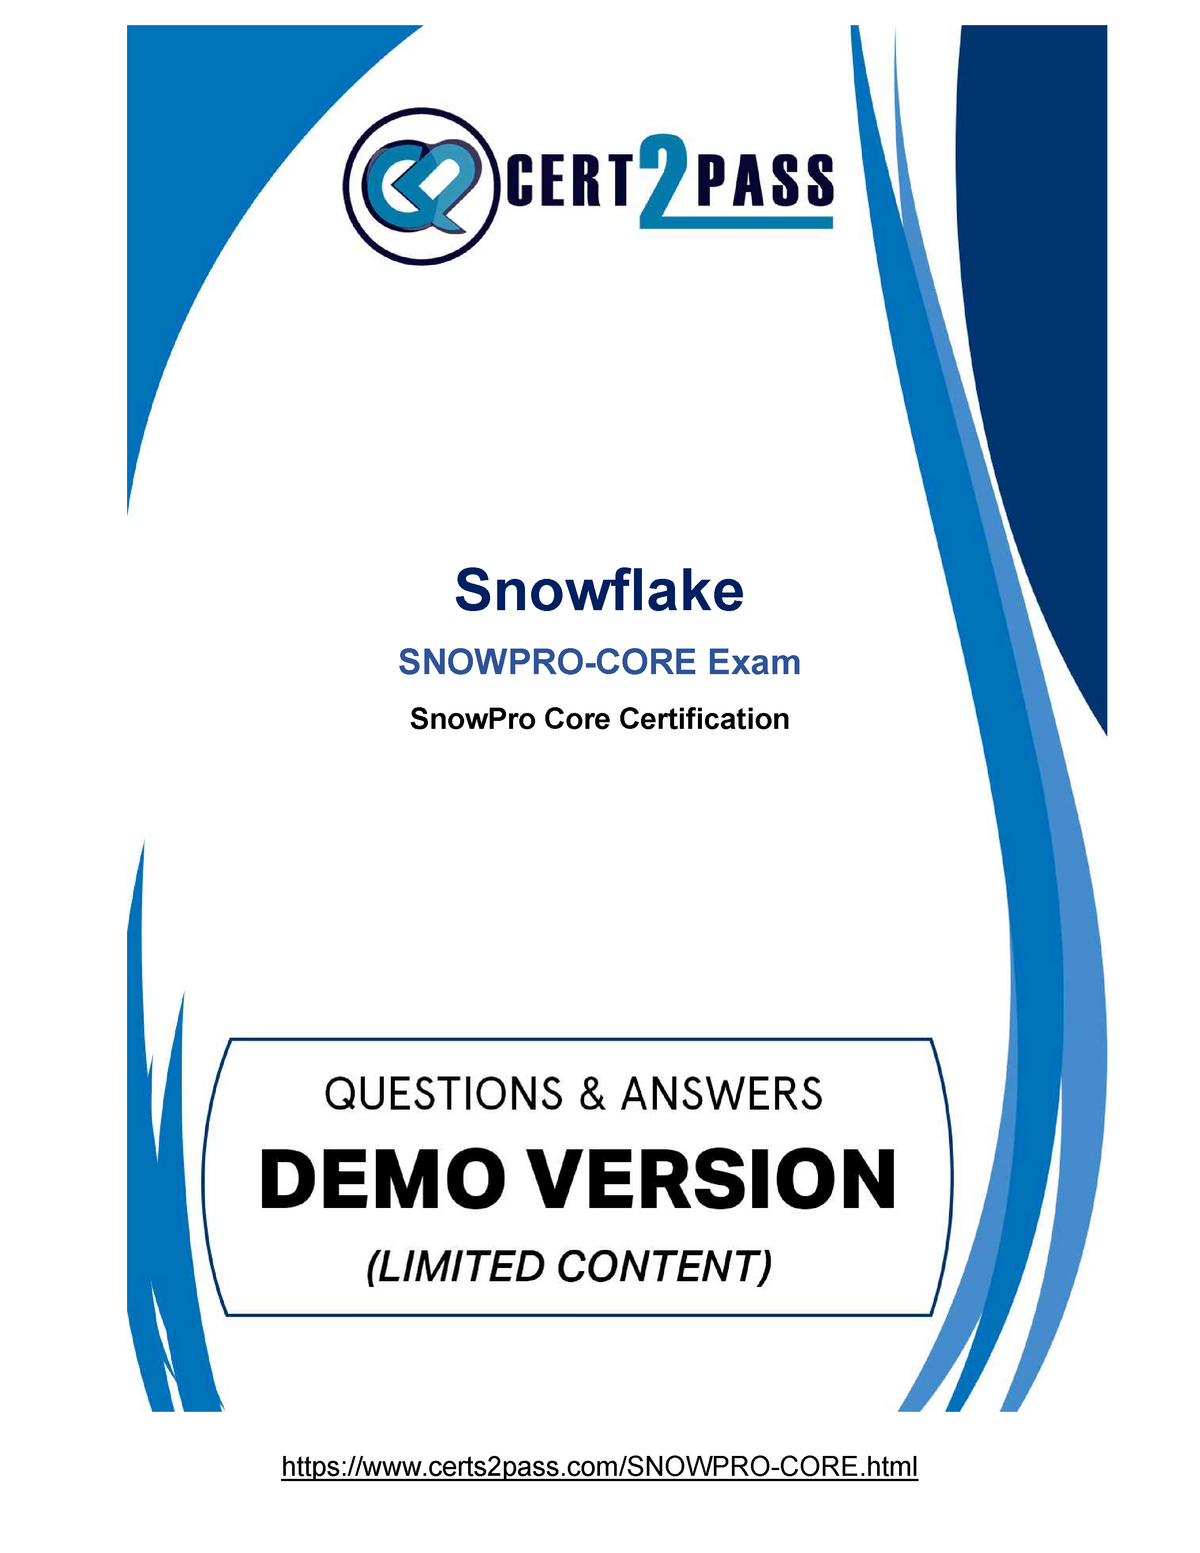 SnowPro-Core Lerntipps - SnowPro-Core Exam Fragen, SnowPro-Core Ausbildungsressourcen